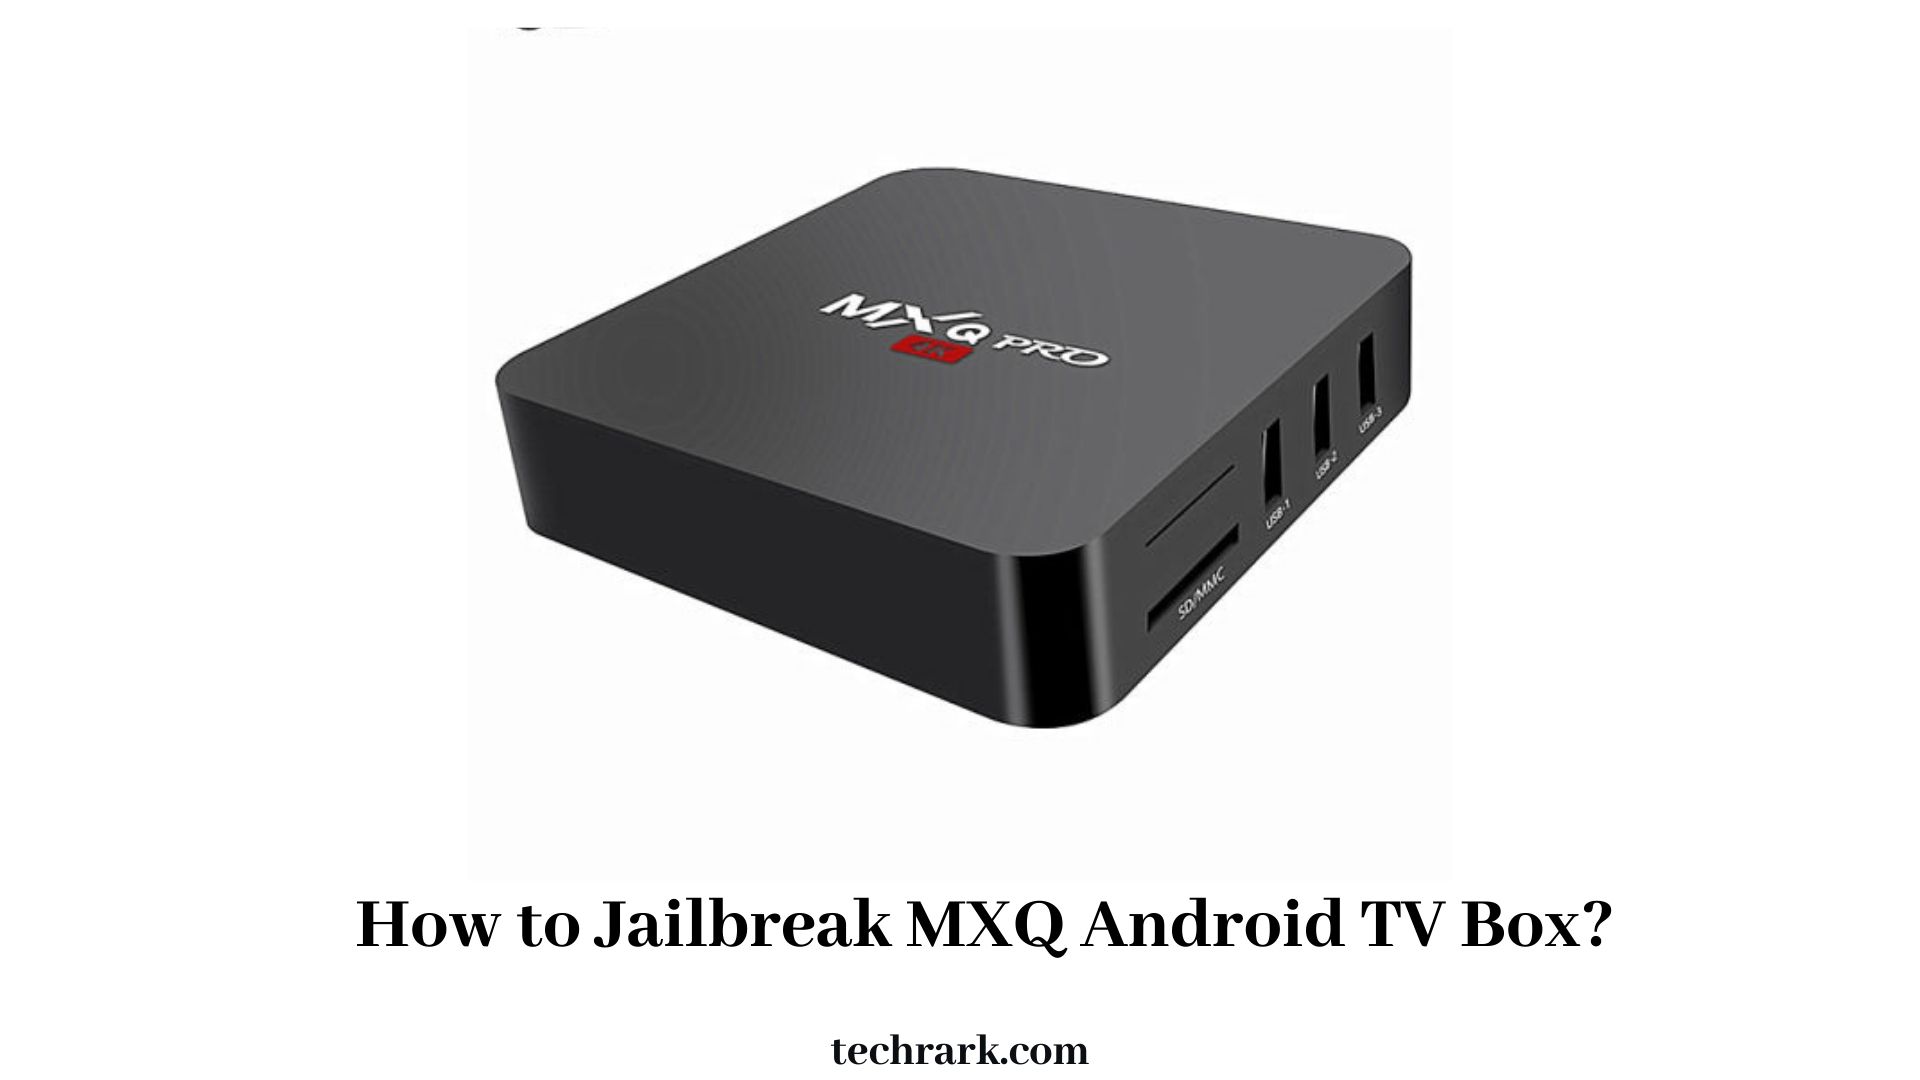 How to Jailbreak MXQ Android TV Box?